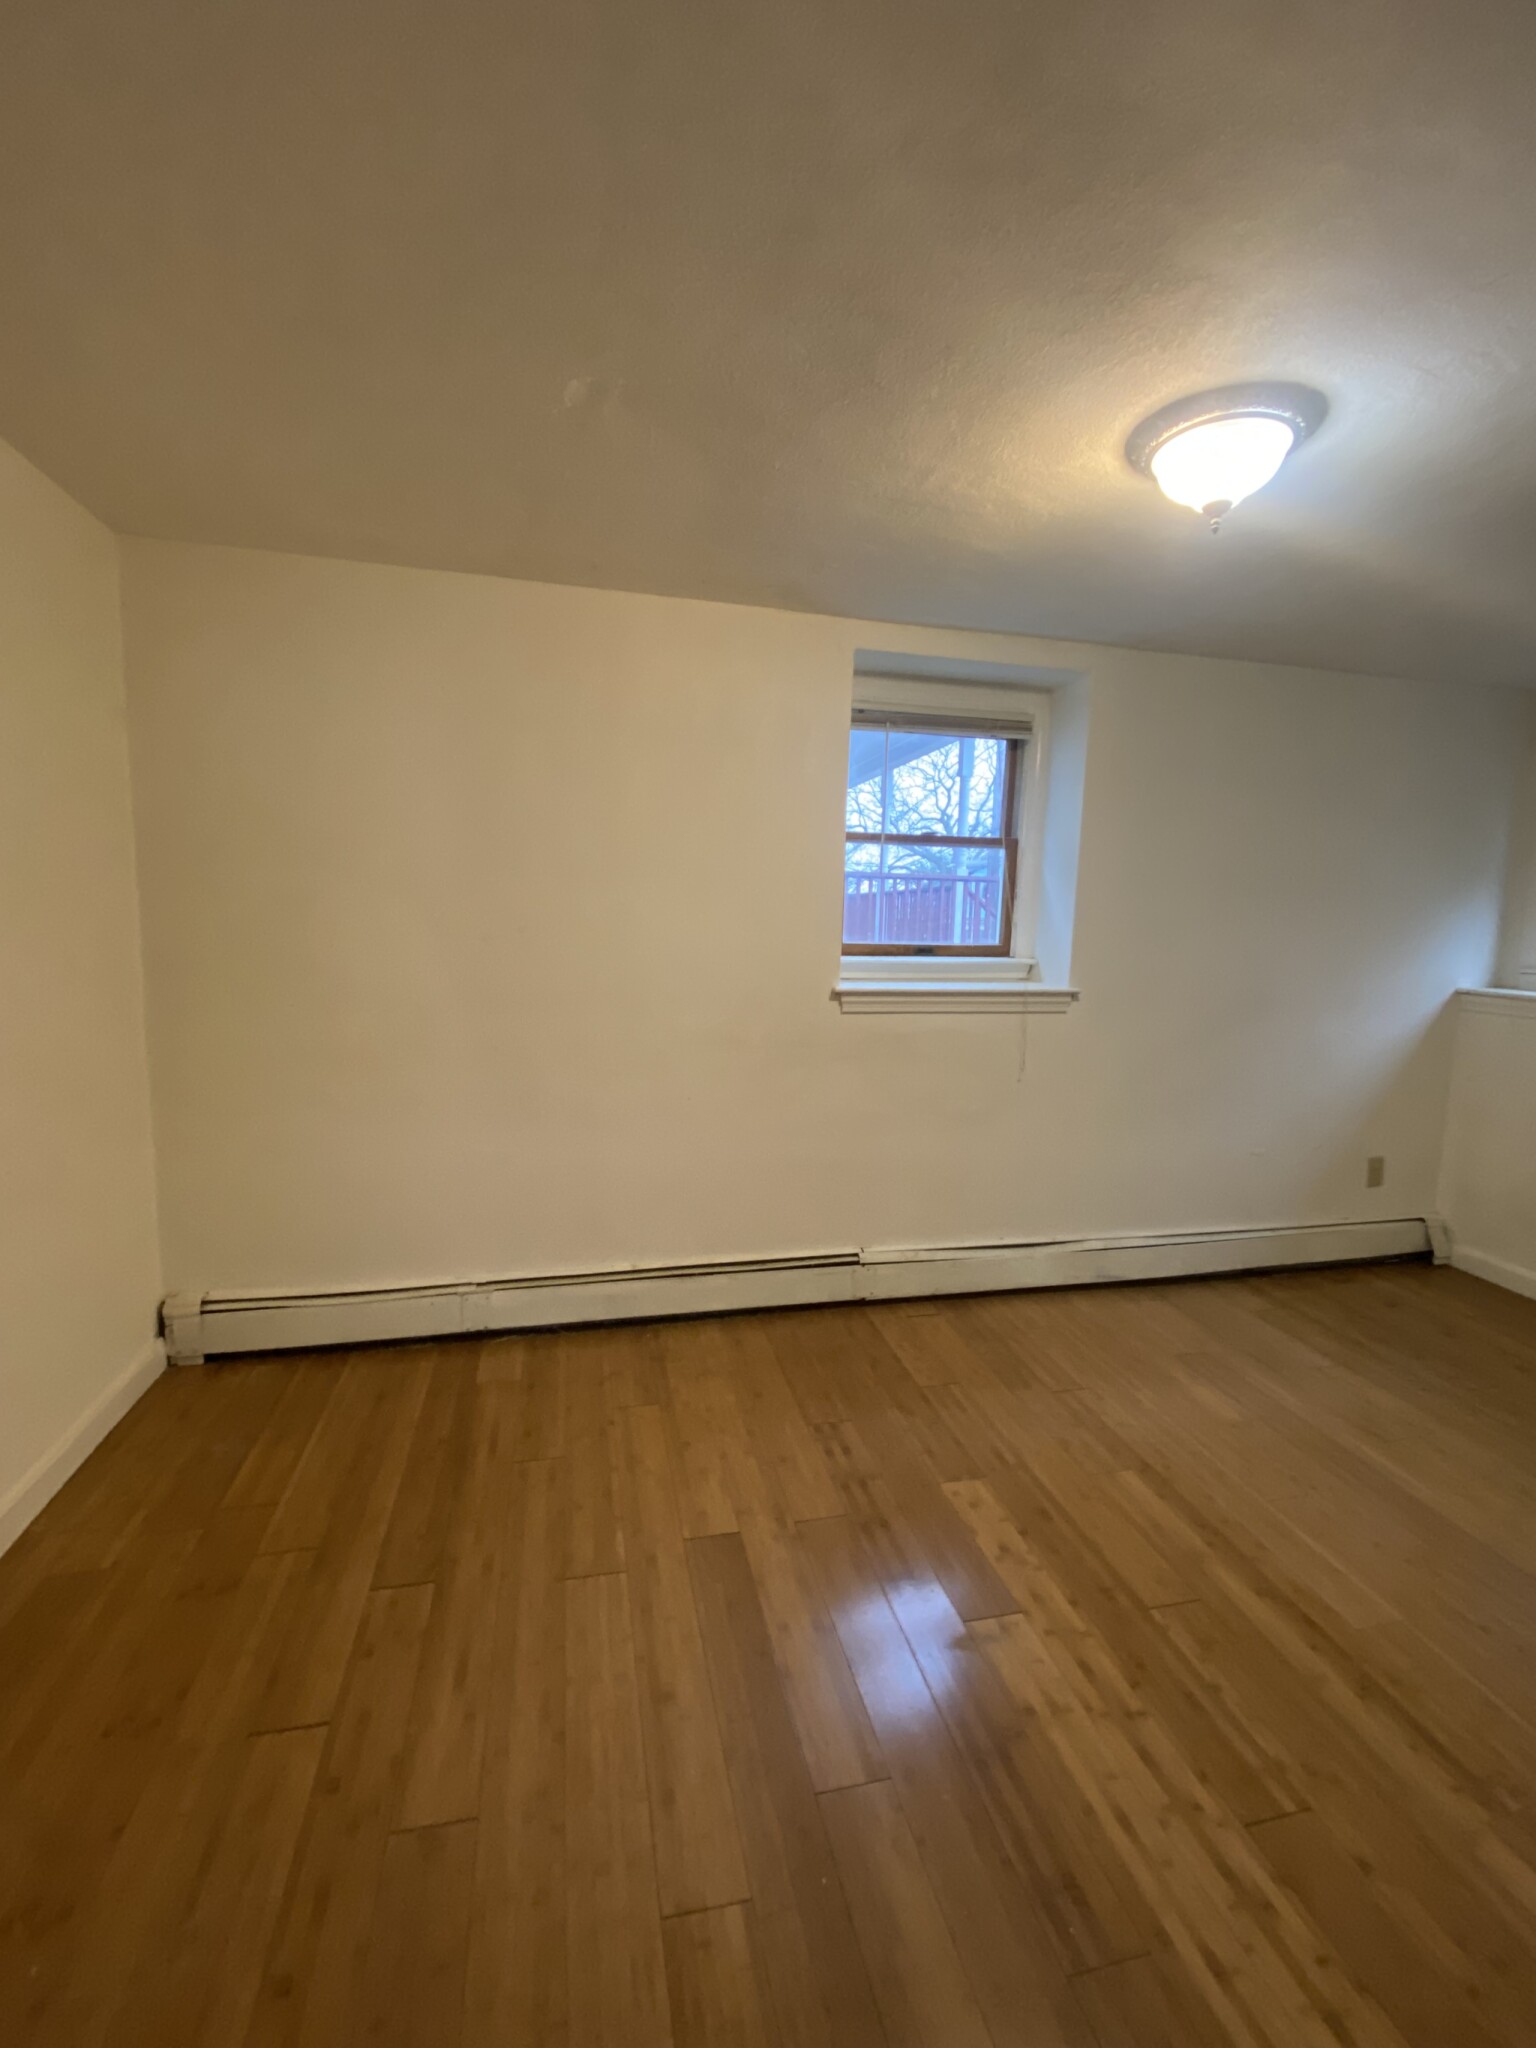 Photos of apartment on weymouth Ave.,Boston MA 02132